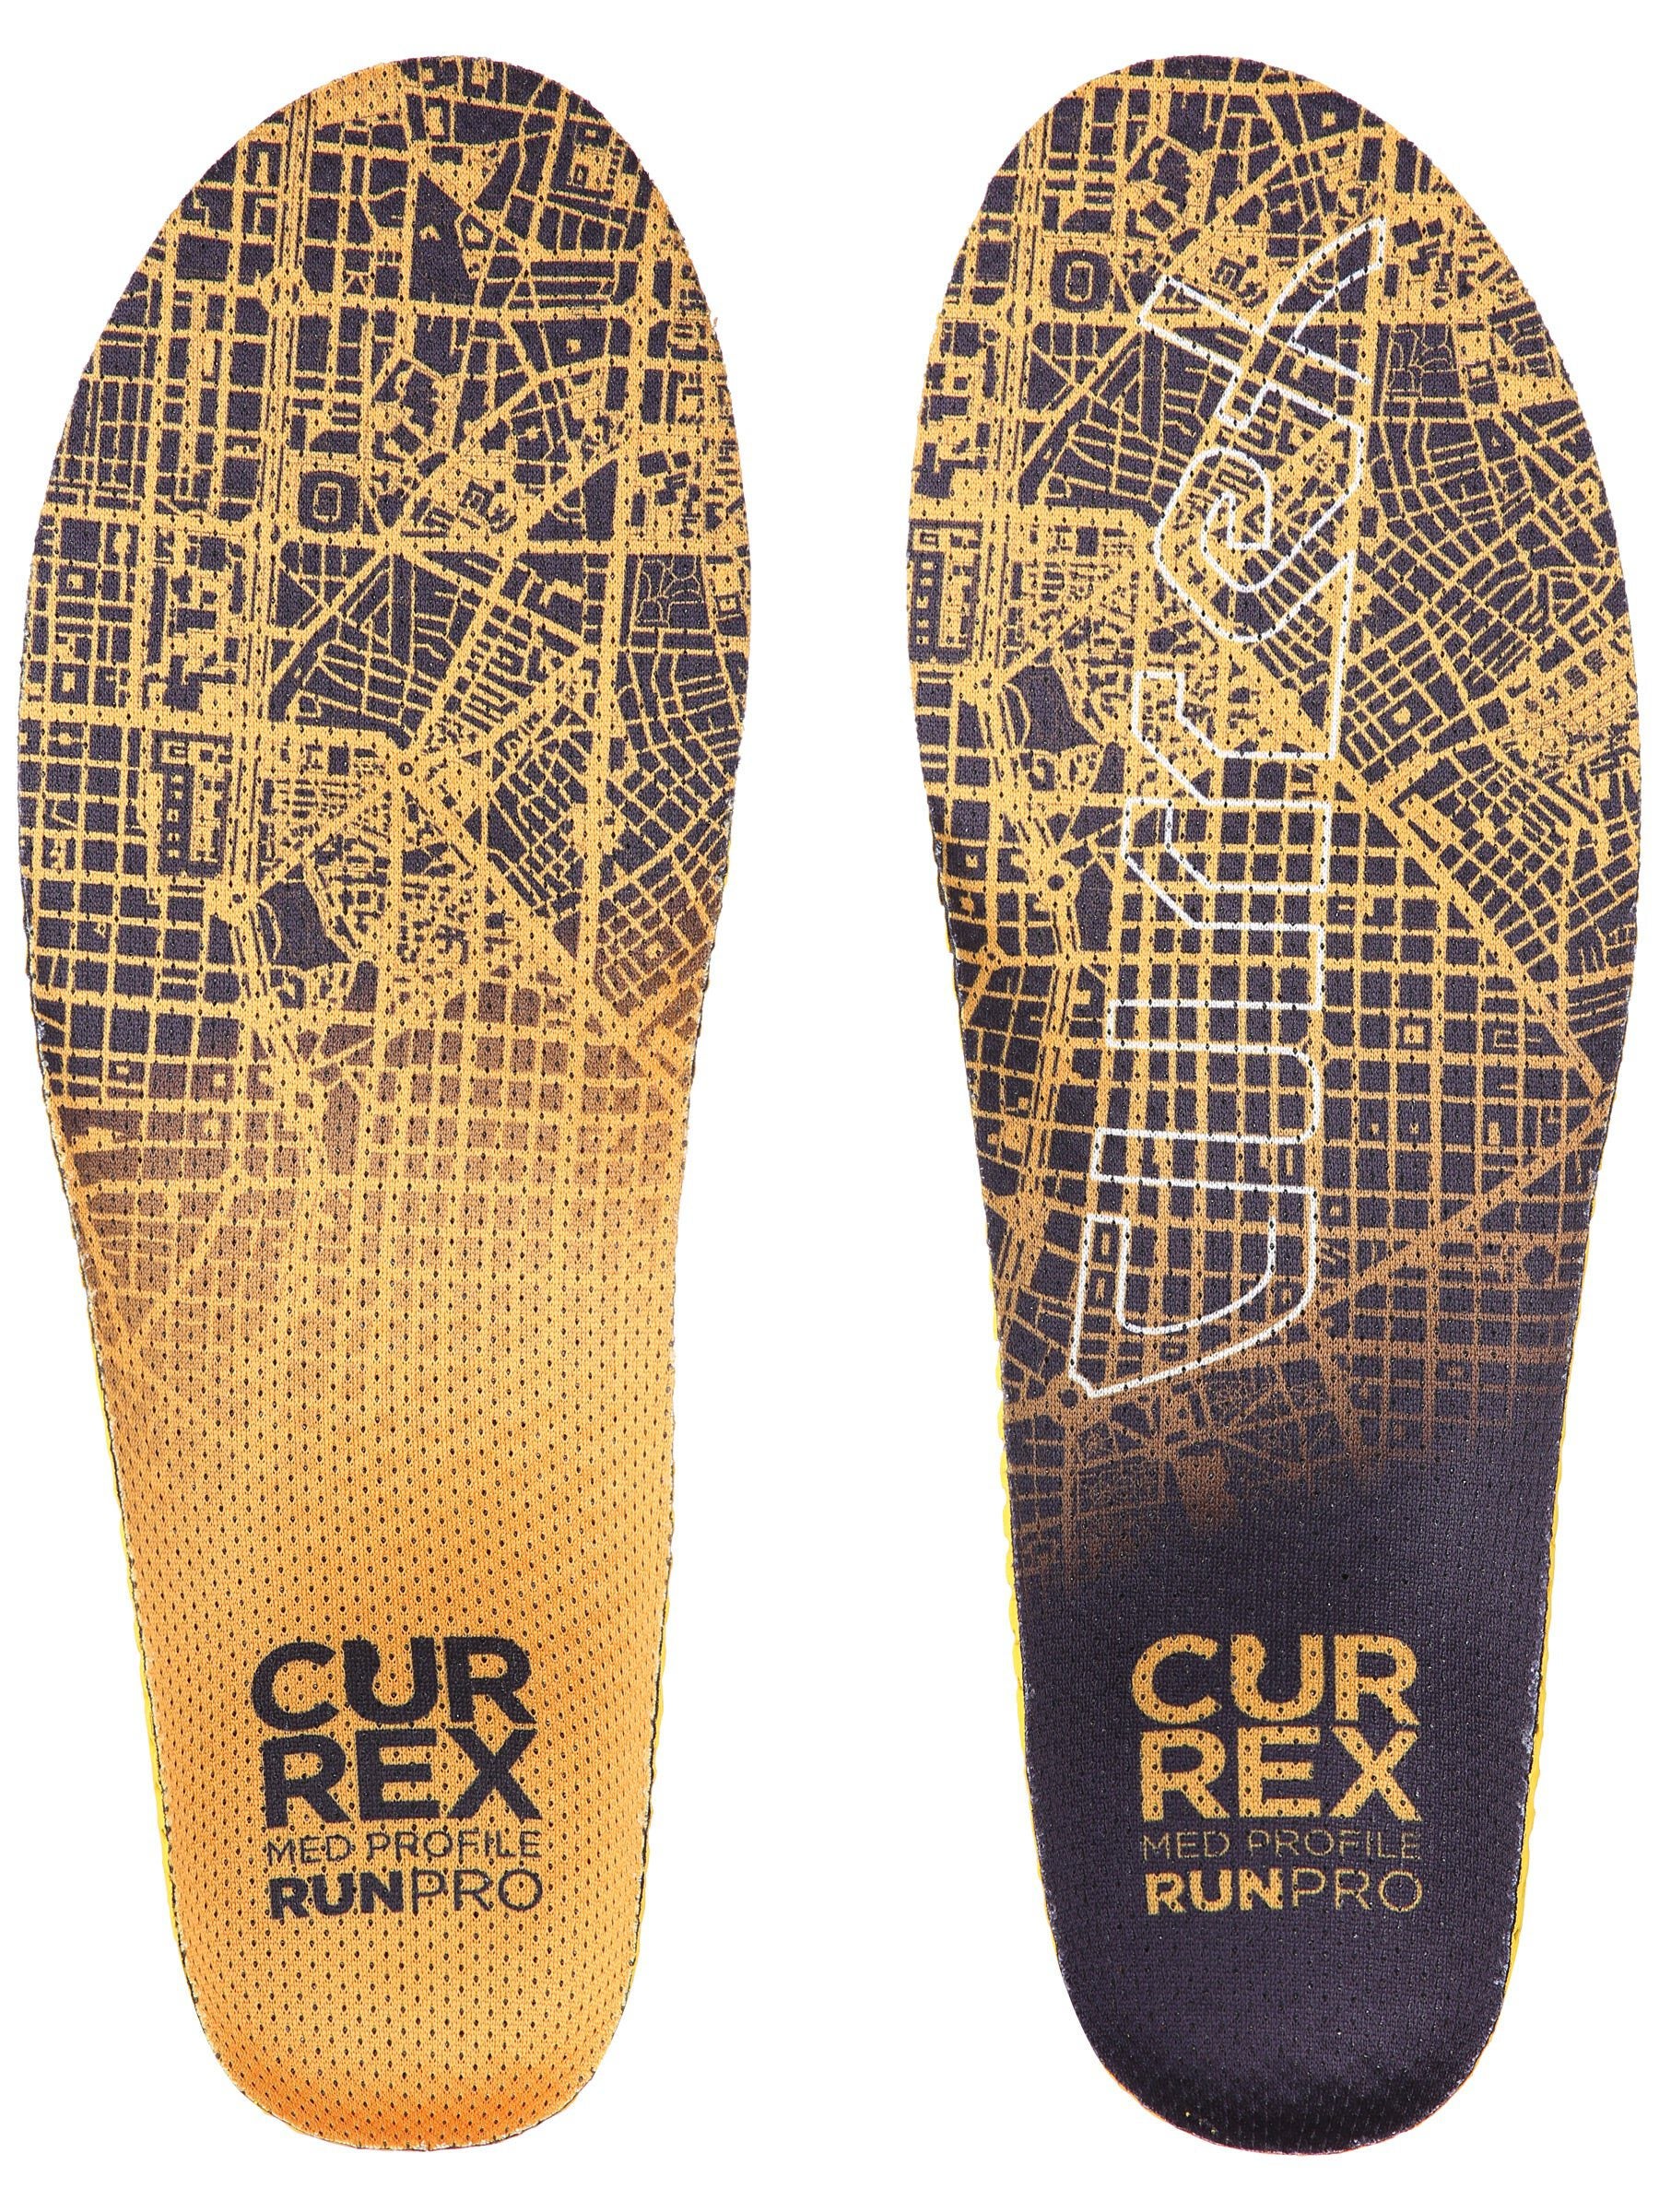 Currexsole Runpro Insoles Men's 10.5-12 Runn size XL Medium Arch Walking 